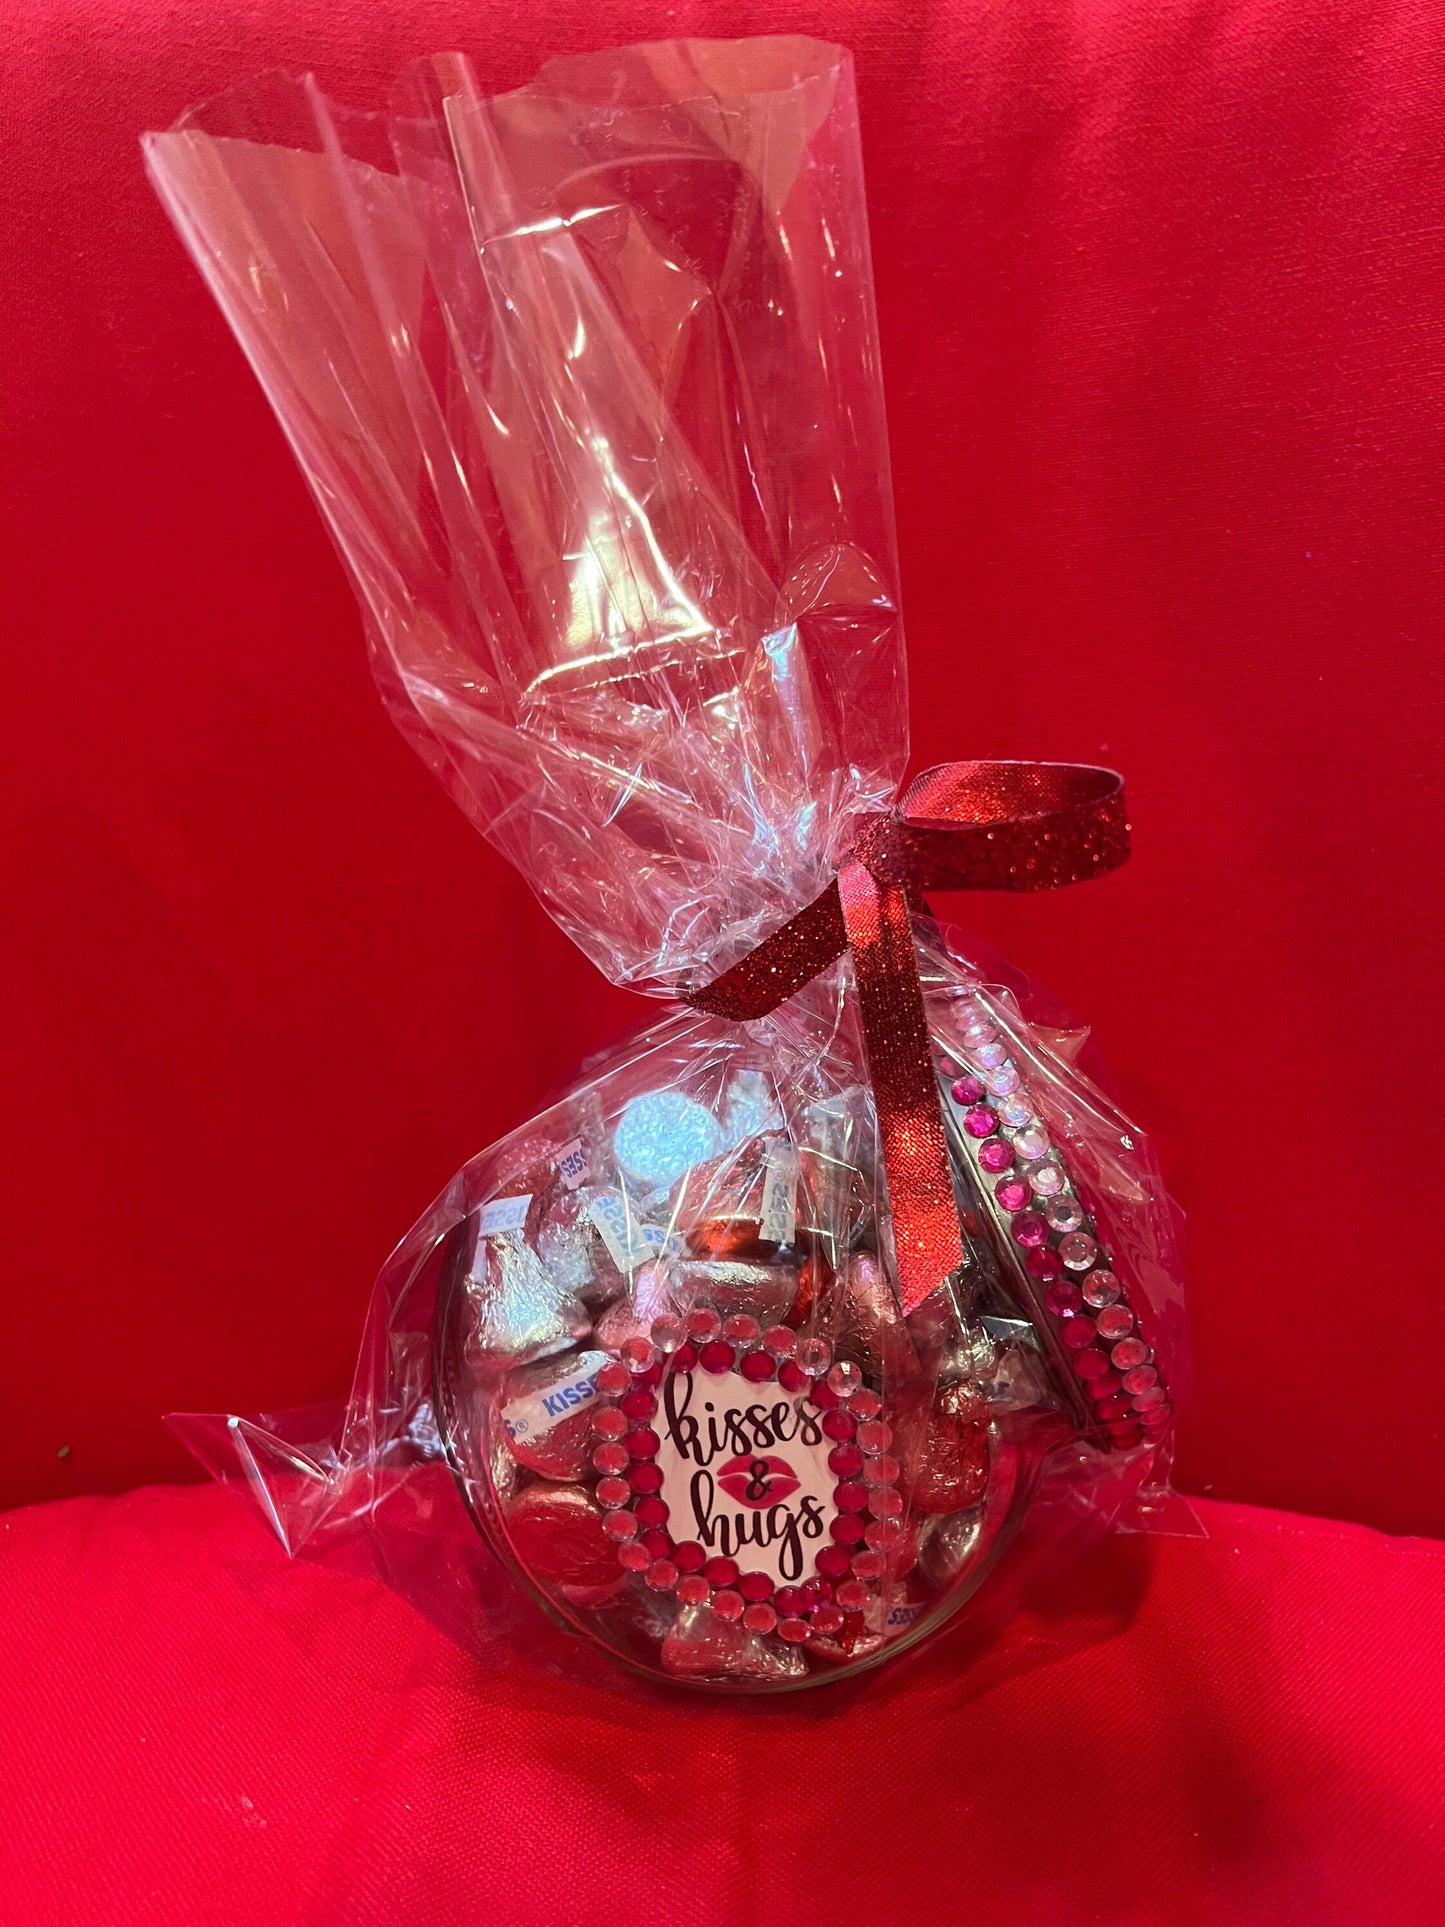 Valentine's Day Candy Jar - Seasonal